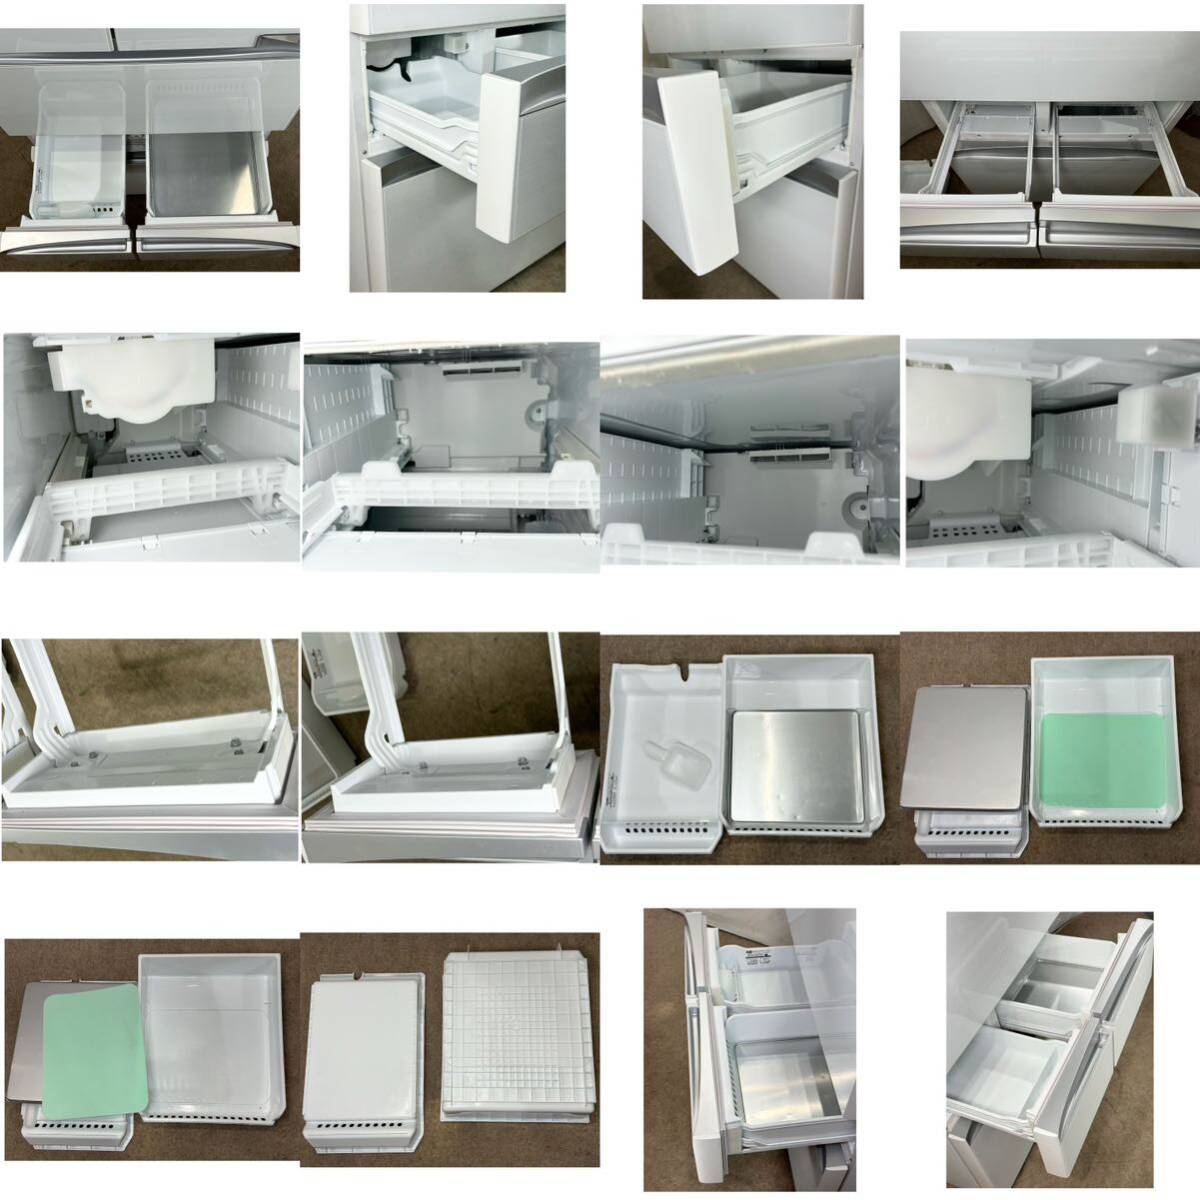 TOSHIBA東芝 6ドア ノンフロン冷凍冷蔵庫 VEGETA GR-S460FZ(UW) [クリアグレインホワイト] ガラストップ タッチオープン461L 2020年製 _画像9